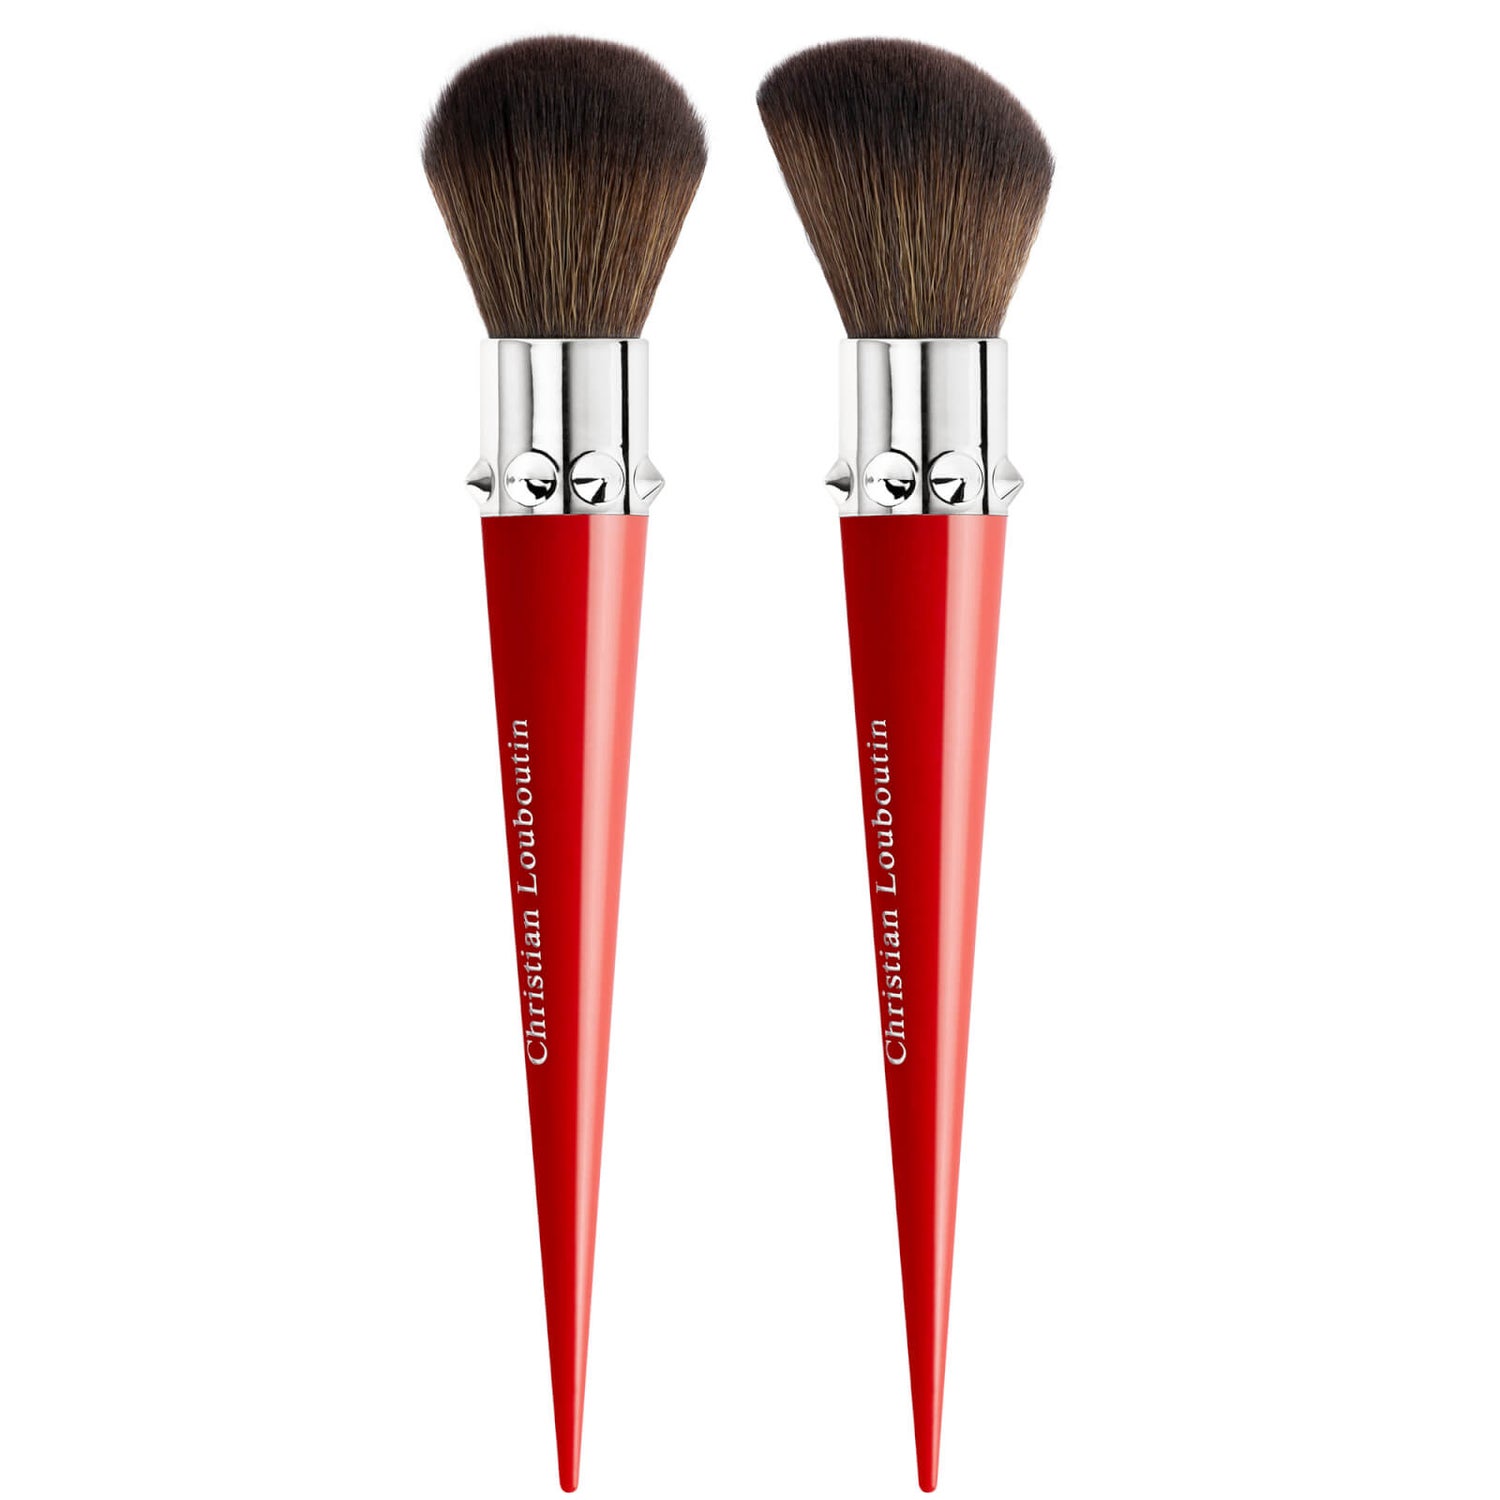 Christian Louboutin Beauty Face Brushes Set